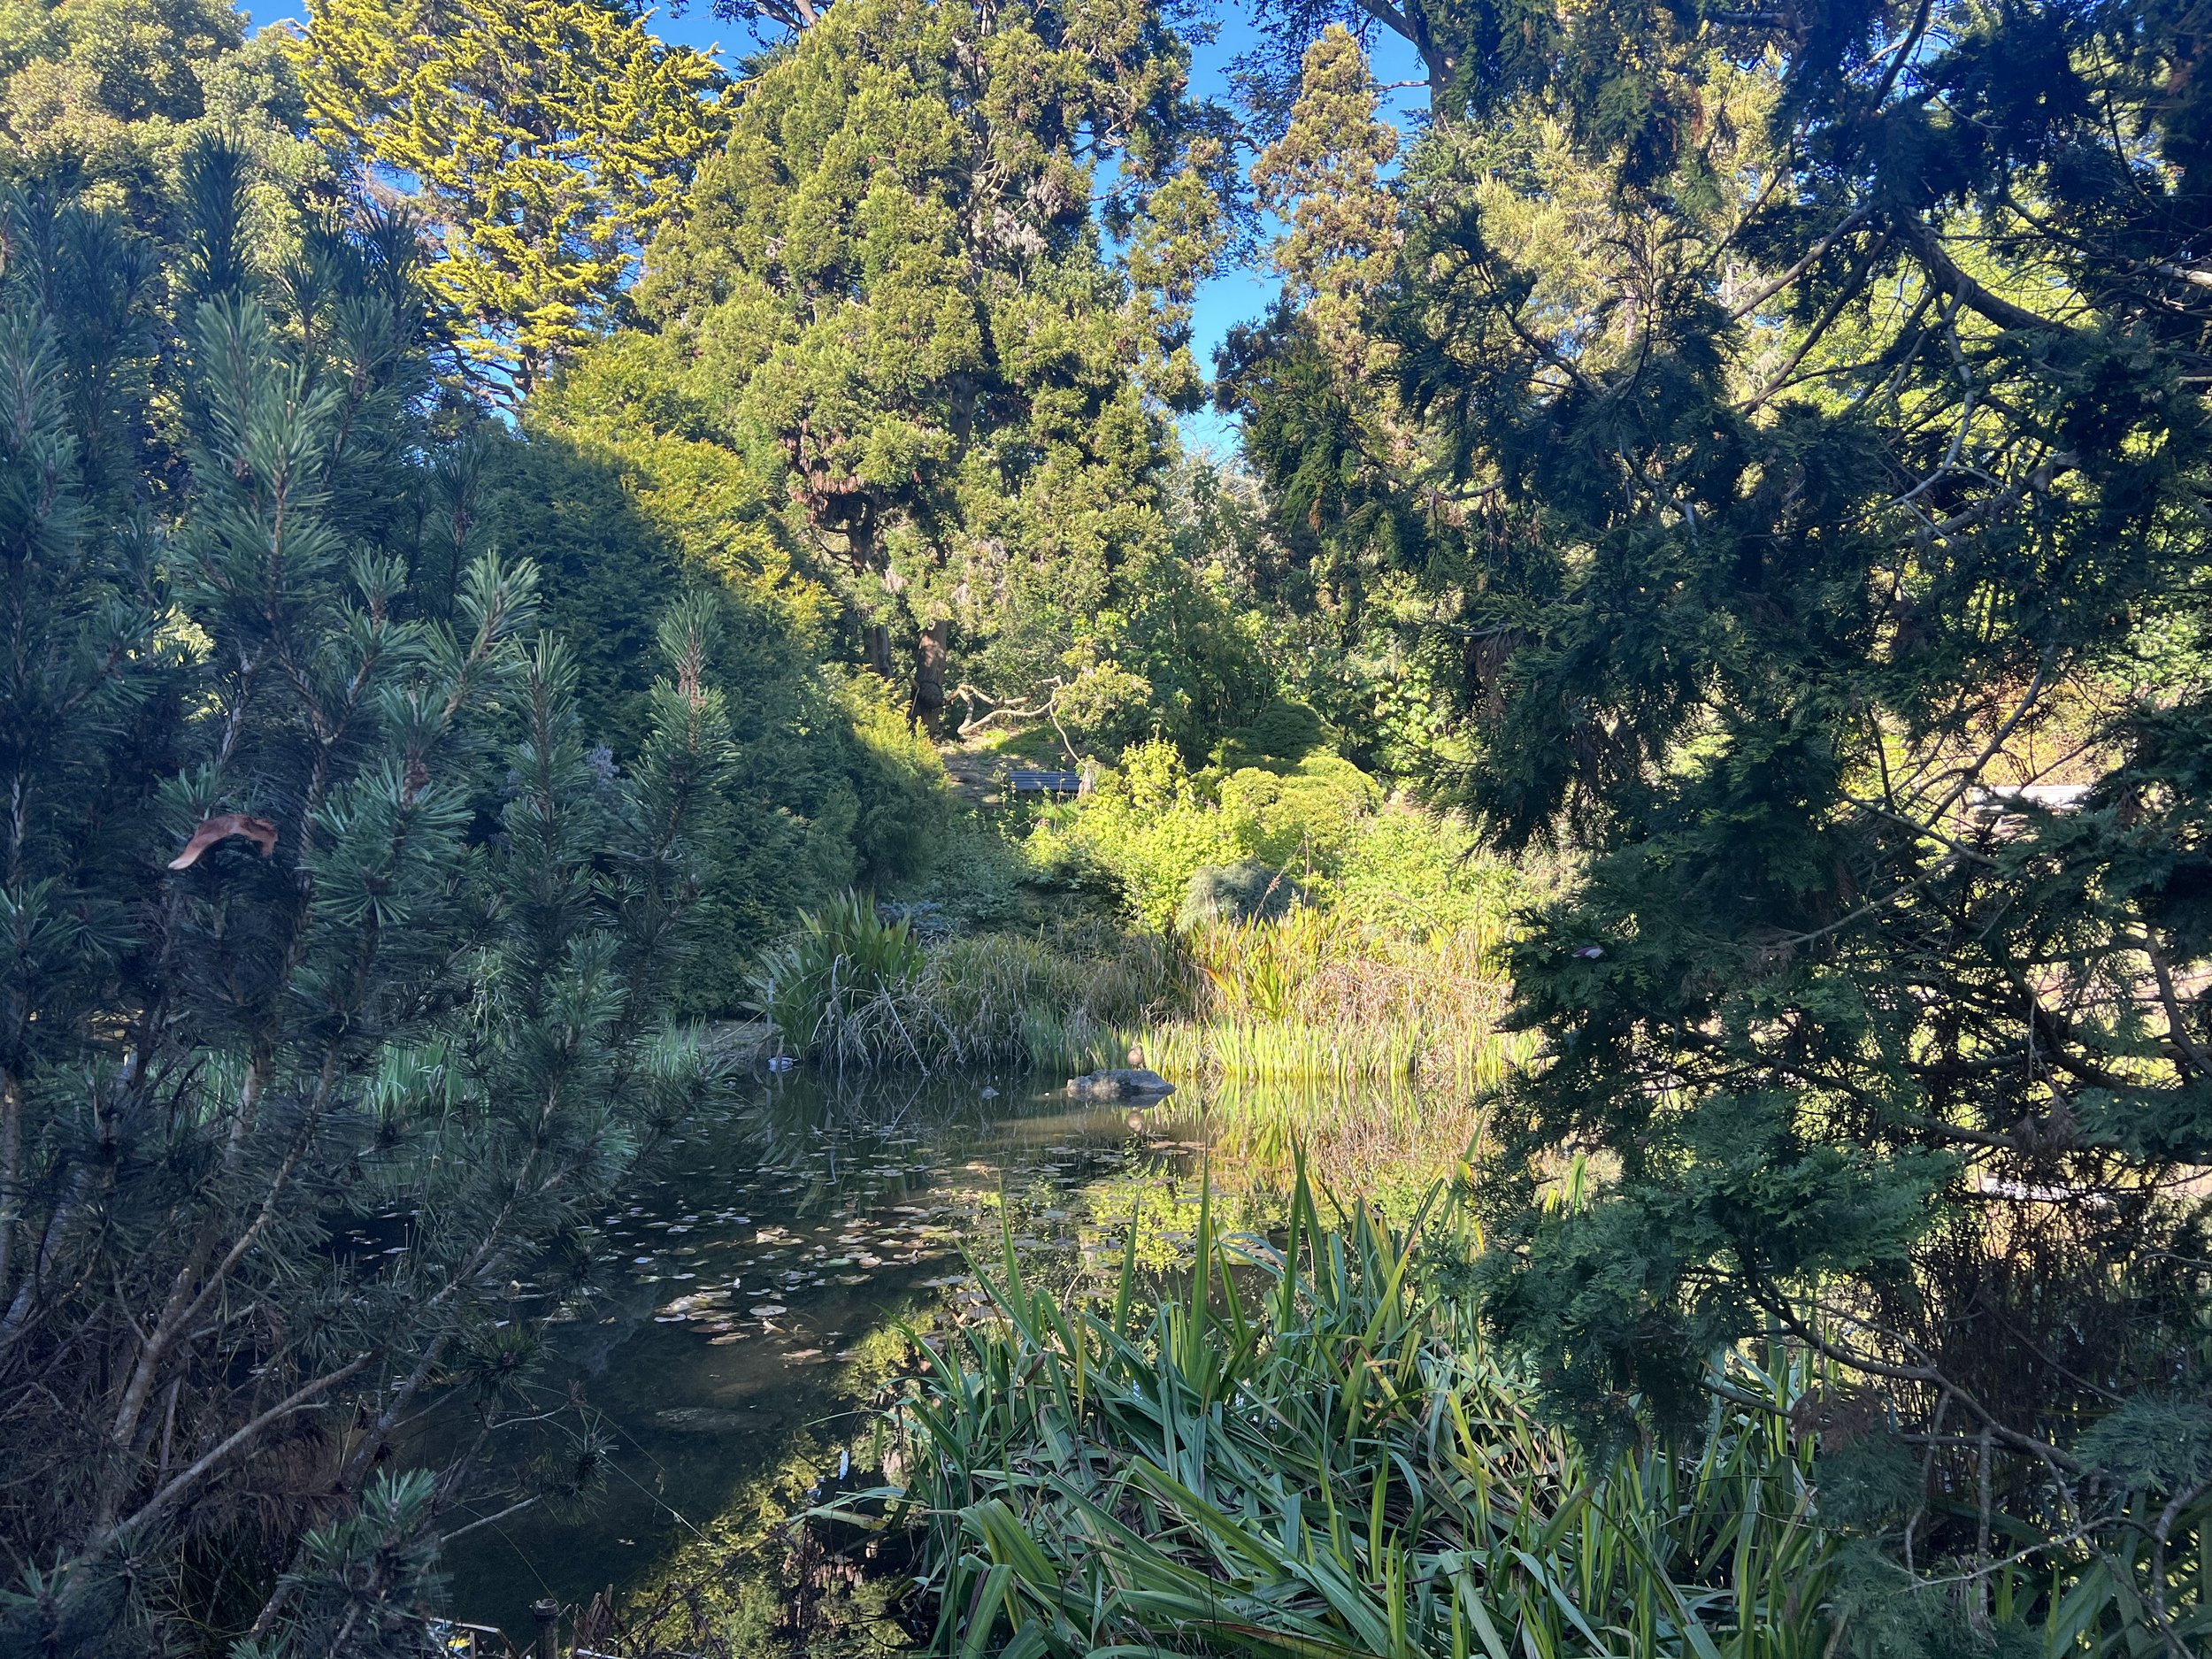 Visiting SF Botanical Garden